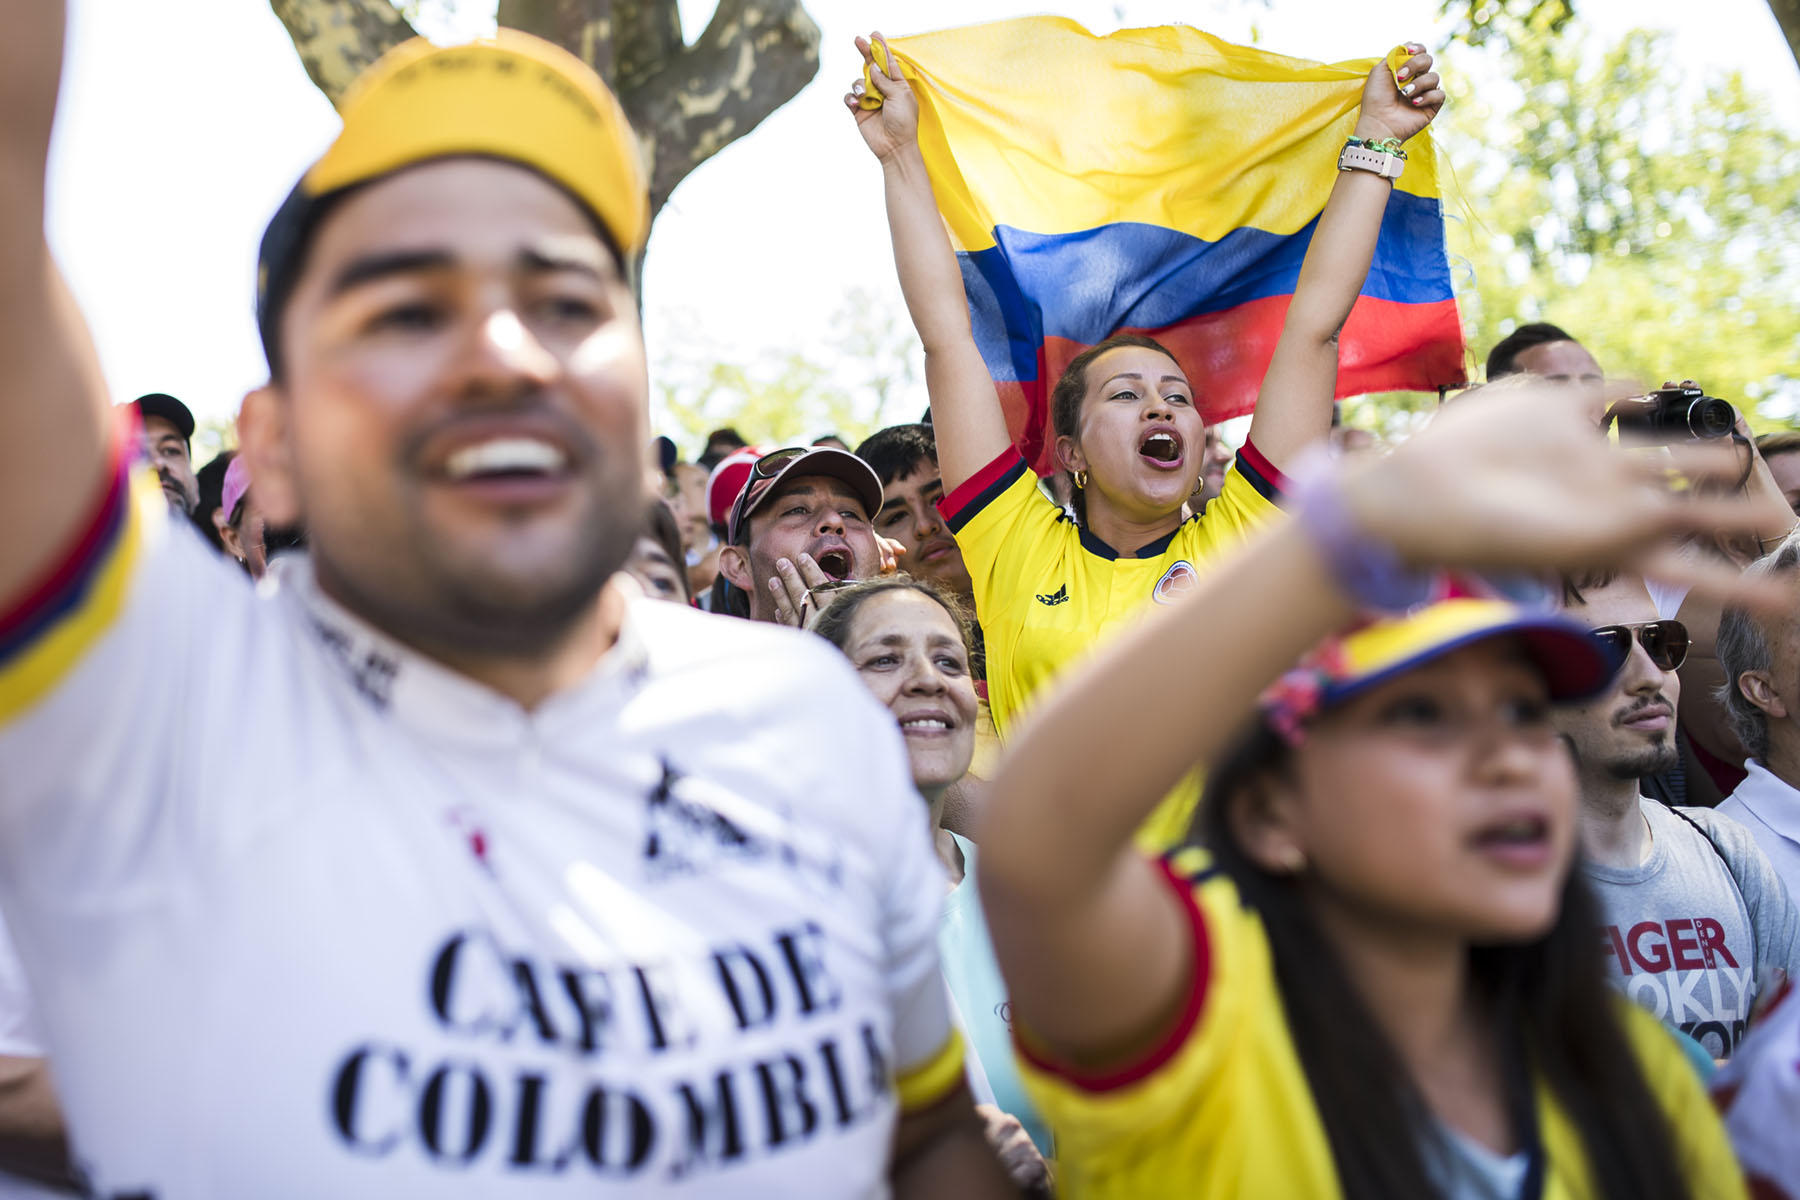 Tour de France 2017 - Stage Fourteen - Colombian fans at the start